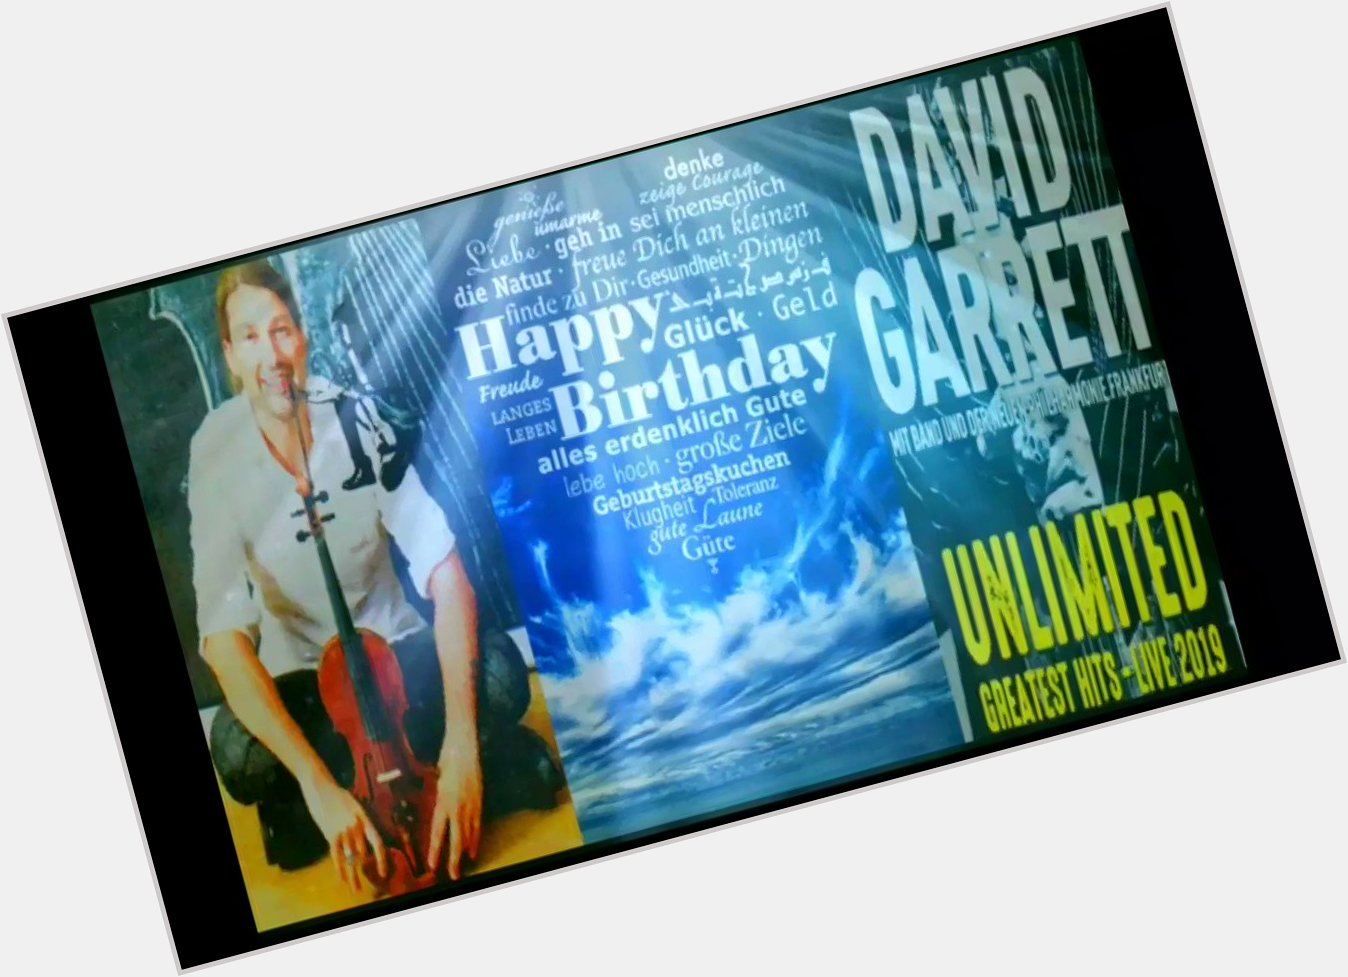  \Happy Birthday David\         